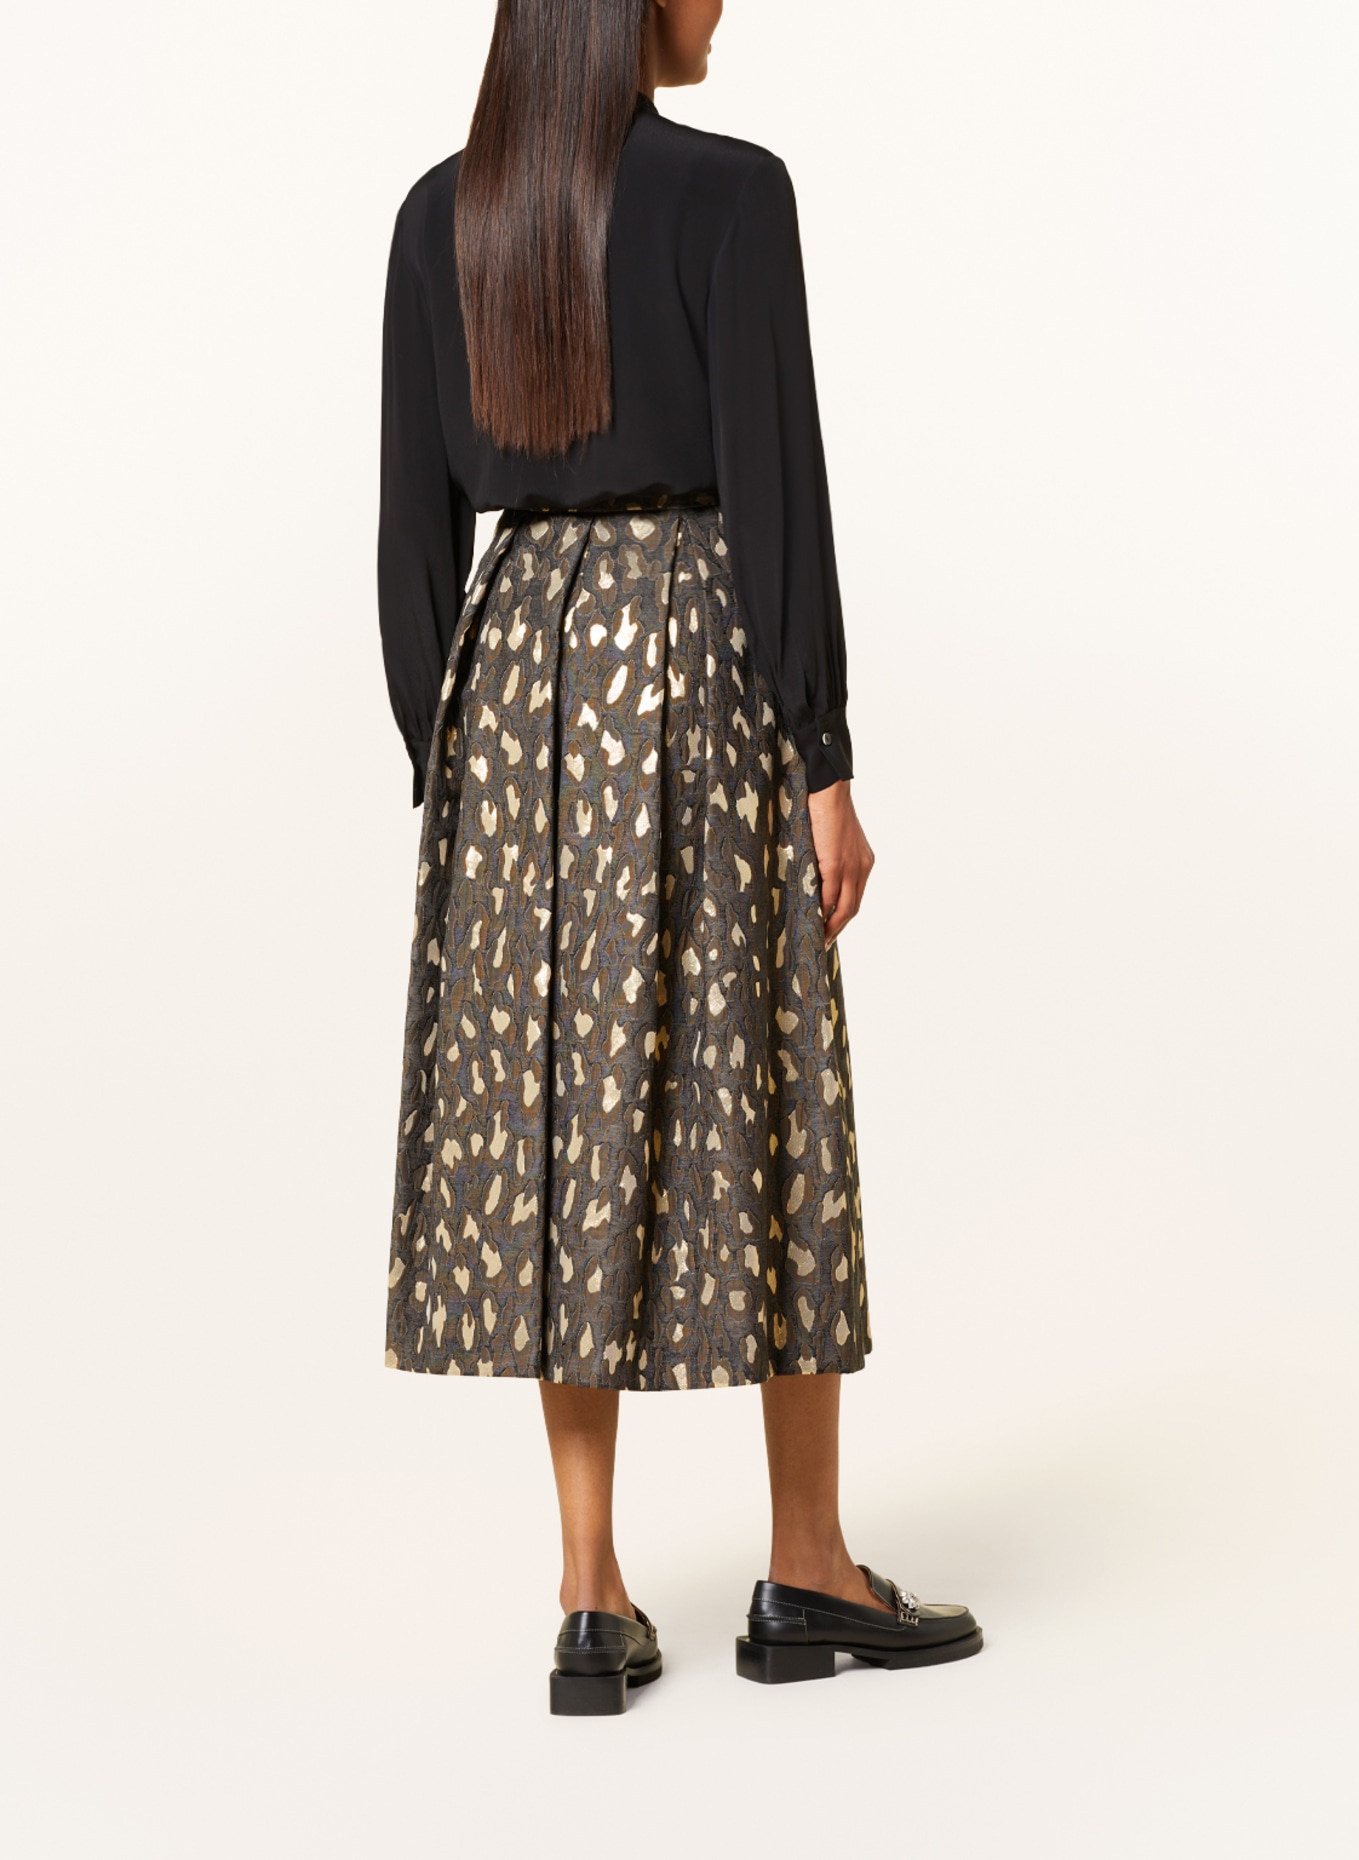 LUNATICA MILANO Jacquard skirt with glitter thread, Color: DARK GRAY/ GOLD (Image 3)